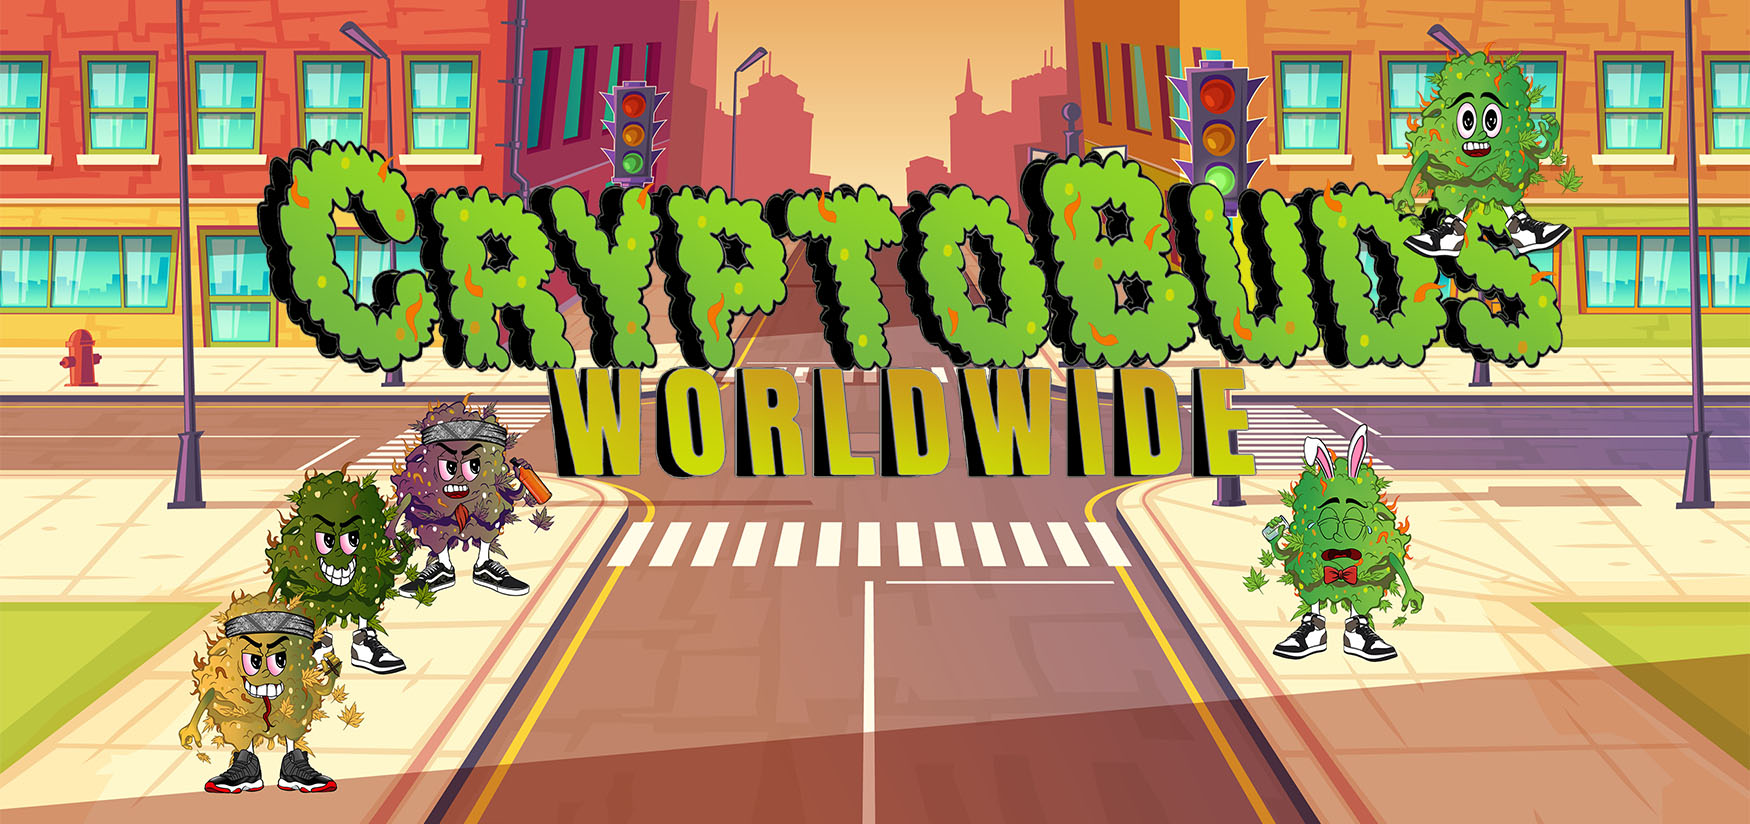 CryptoBuds_Worldwide banner